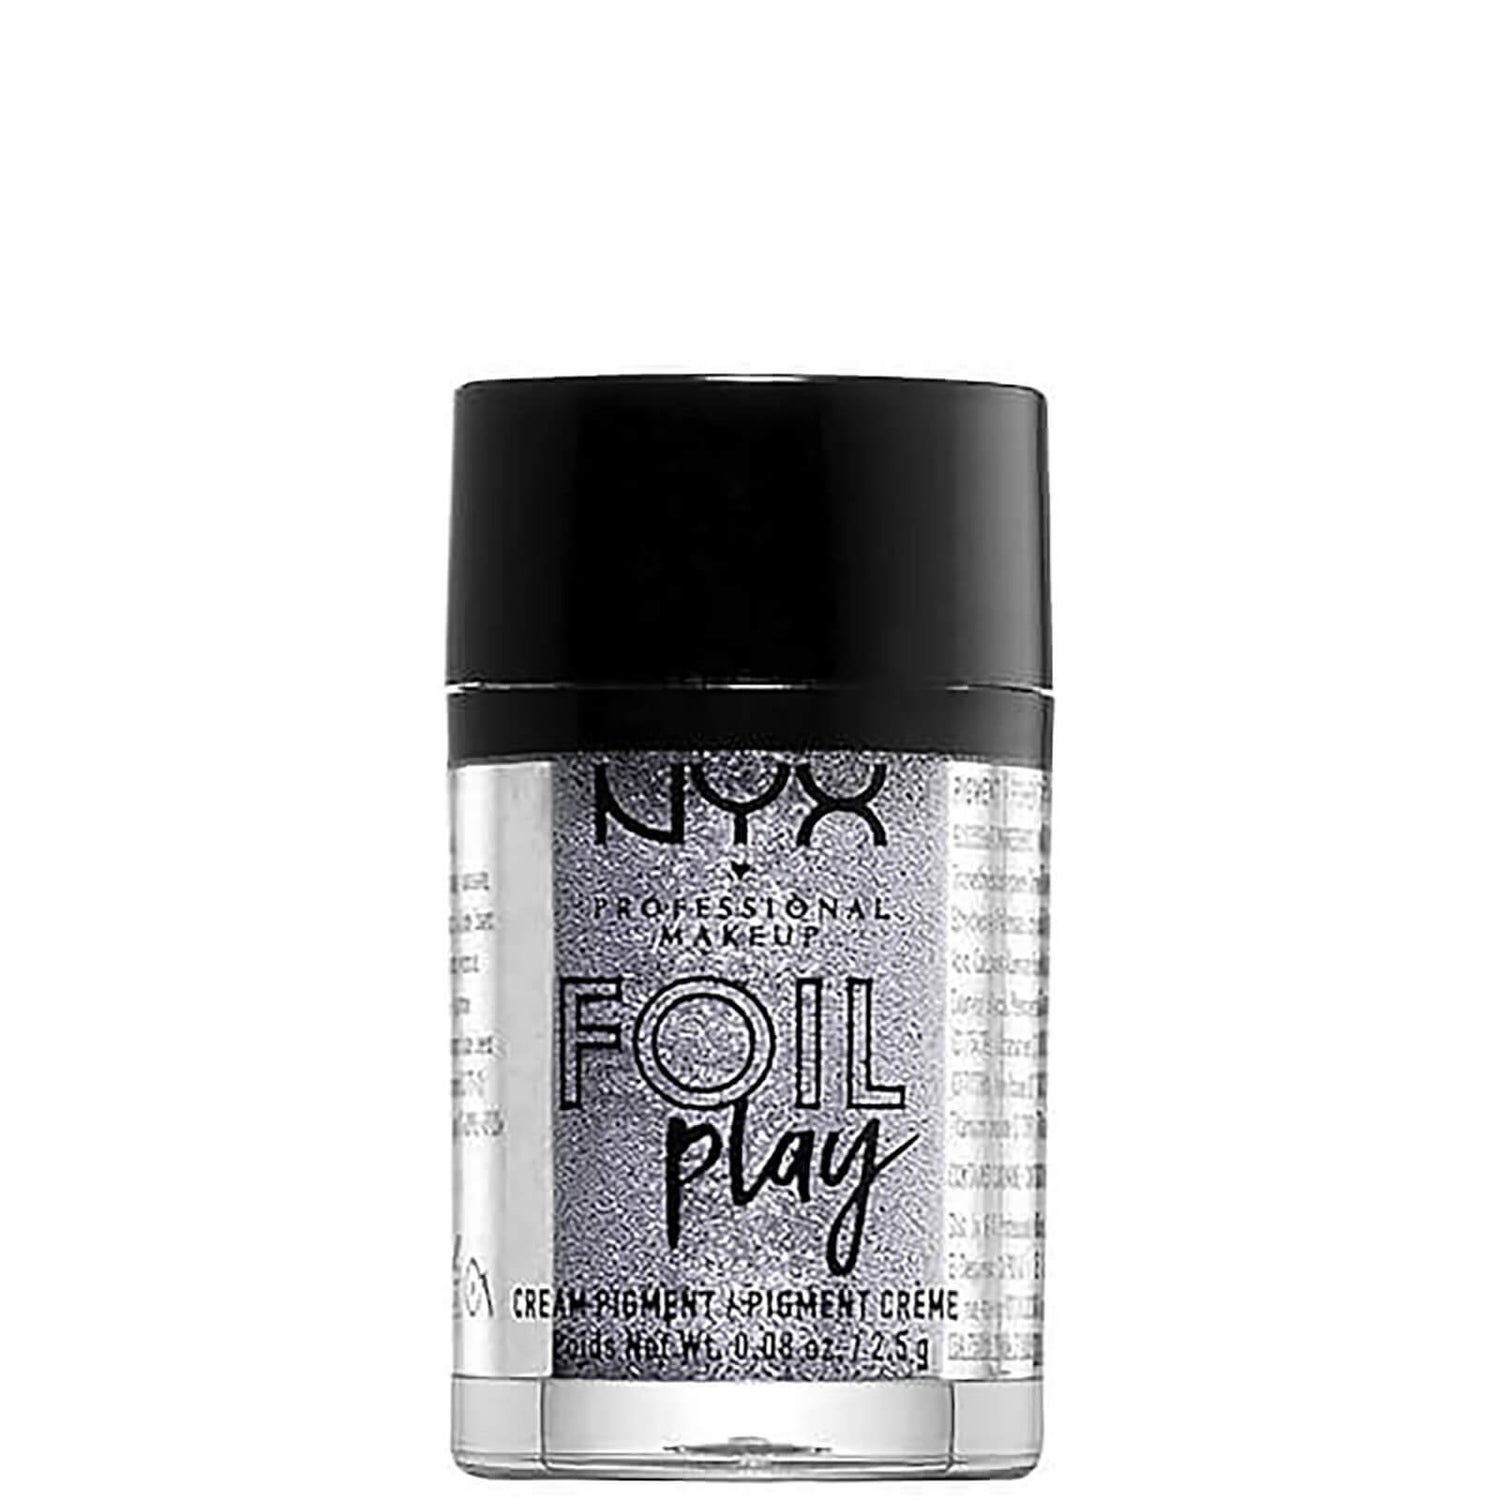 Sombra de ojos de pigmentos Foil Play Cream Pigment de NYX Professional Makeup (varios tonos)